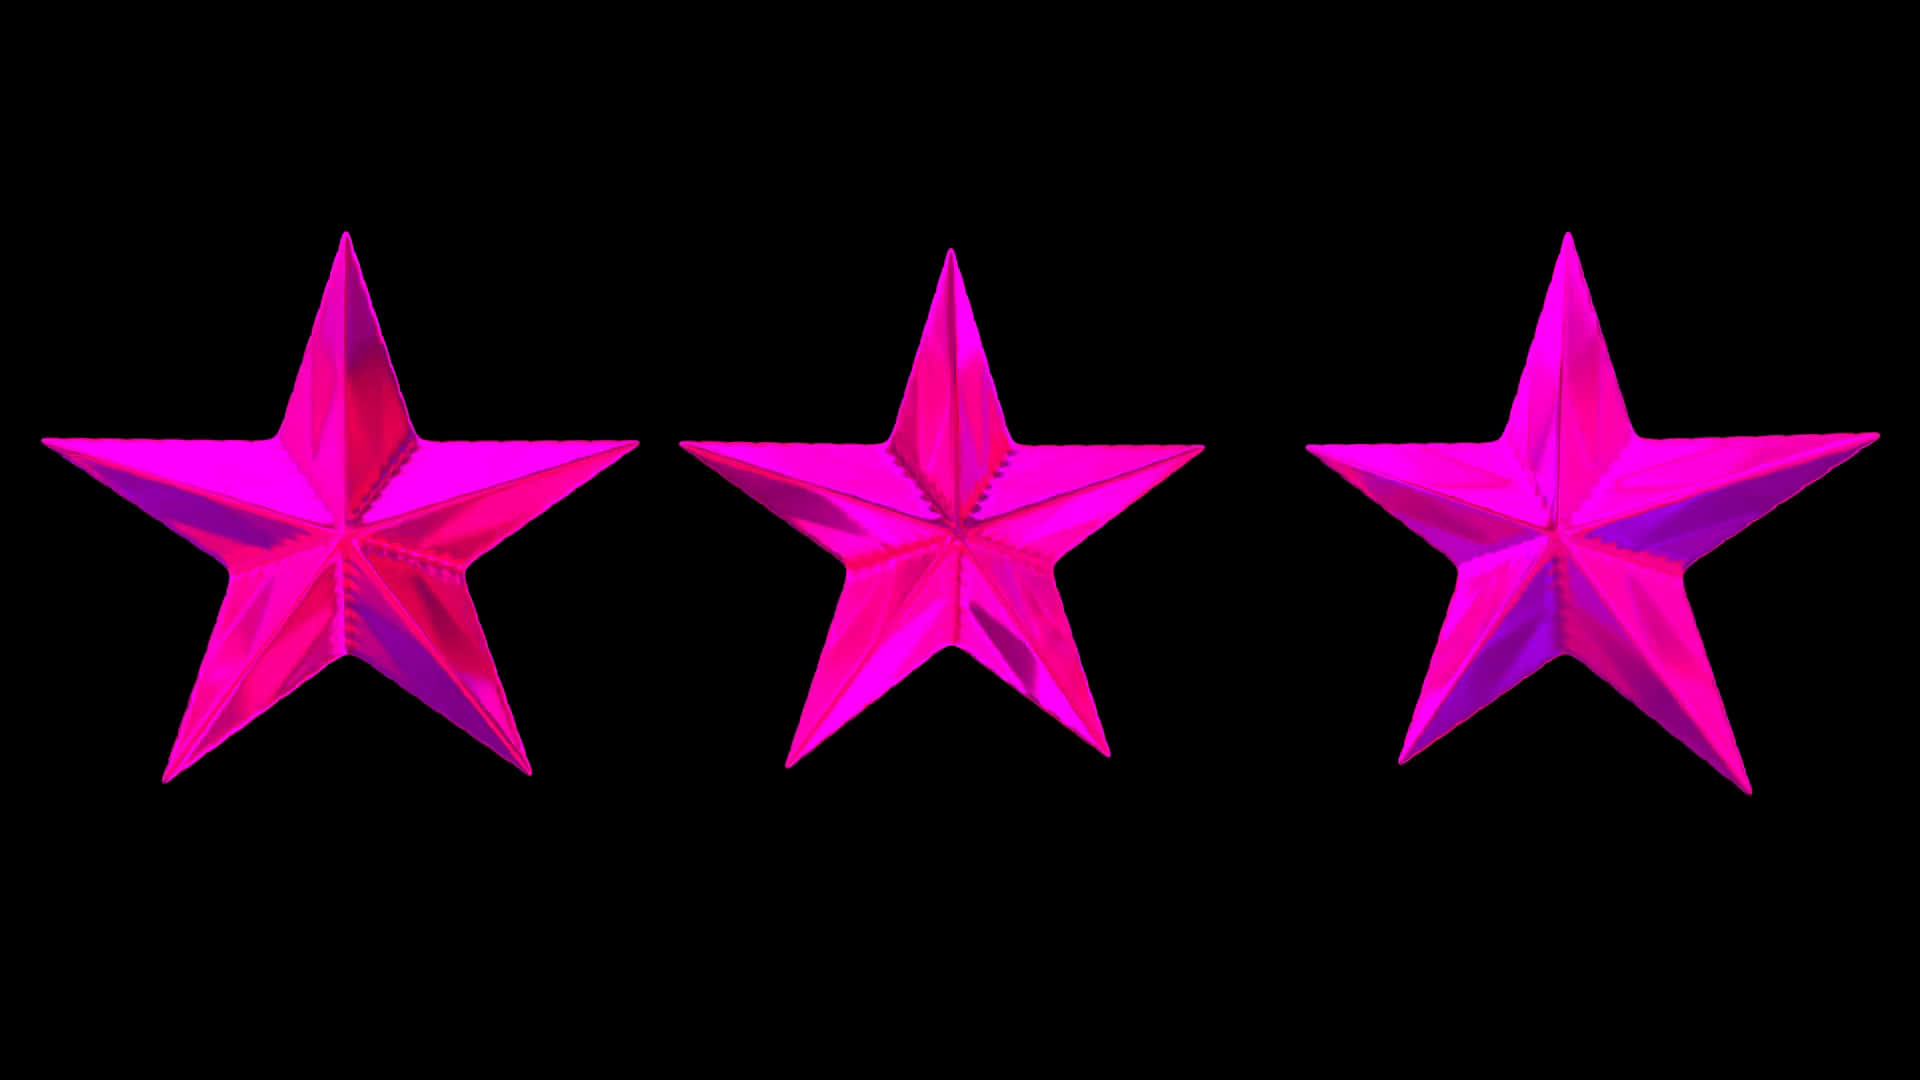 three pink stars on a black background